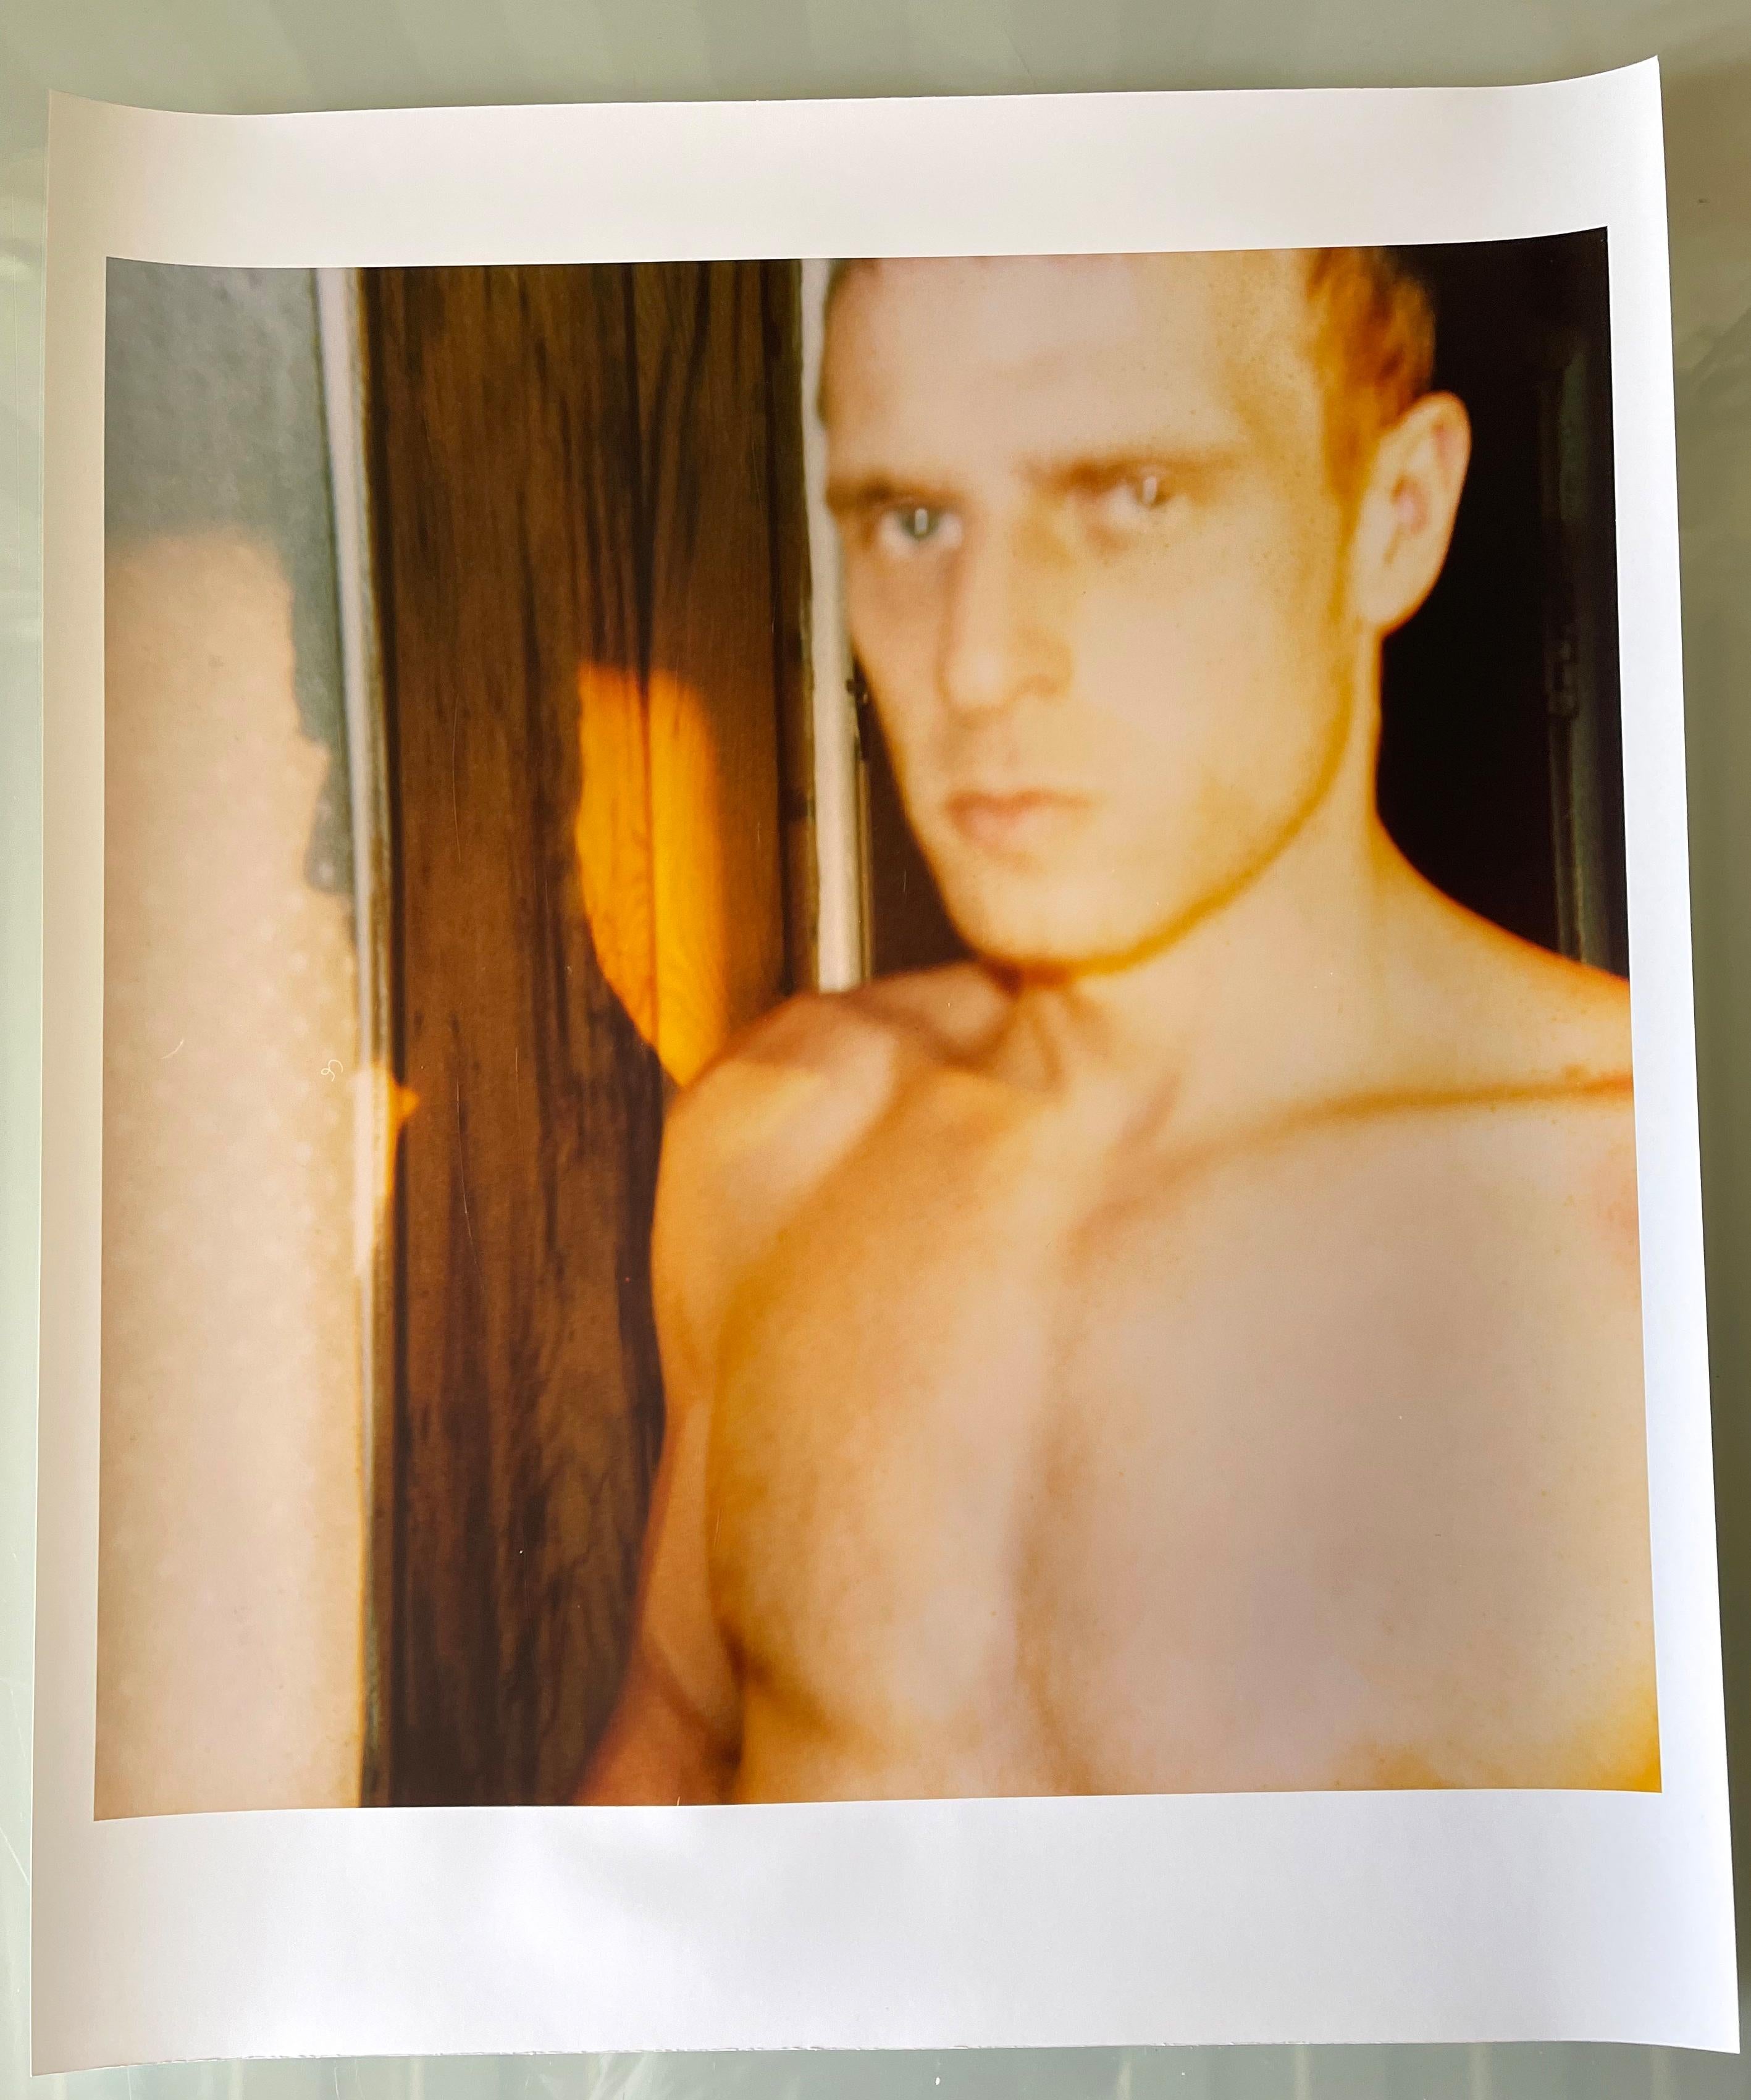 Male Nude (29 Palms, CA) - 58x56cm, analog, Polaroid, Contemporary, 20th Century - Photograph by Stefanie Schneider